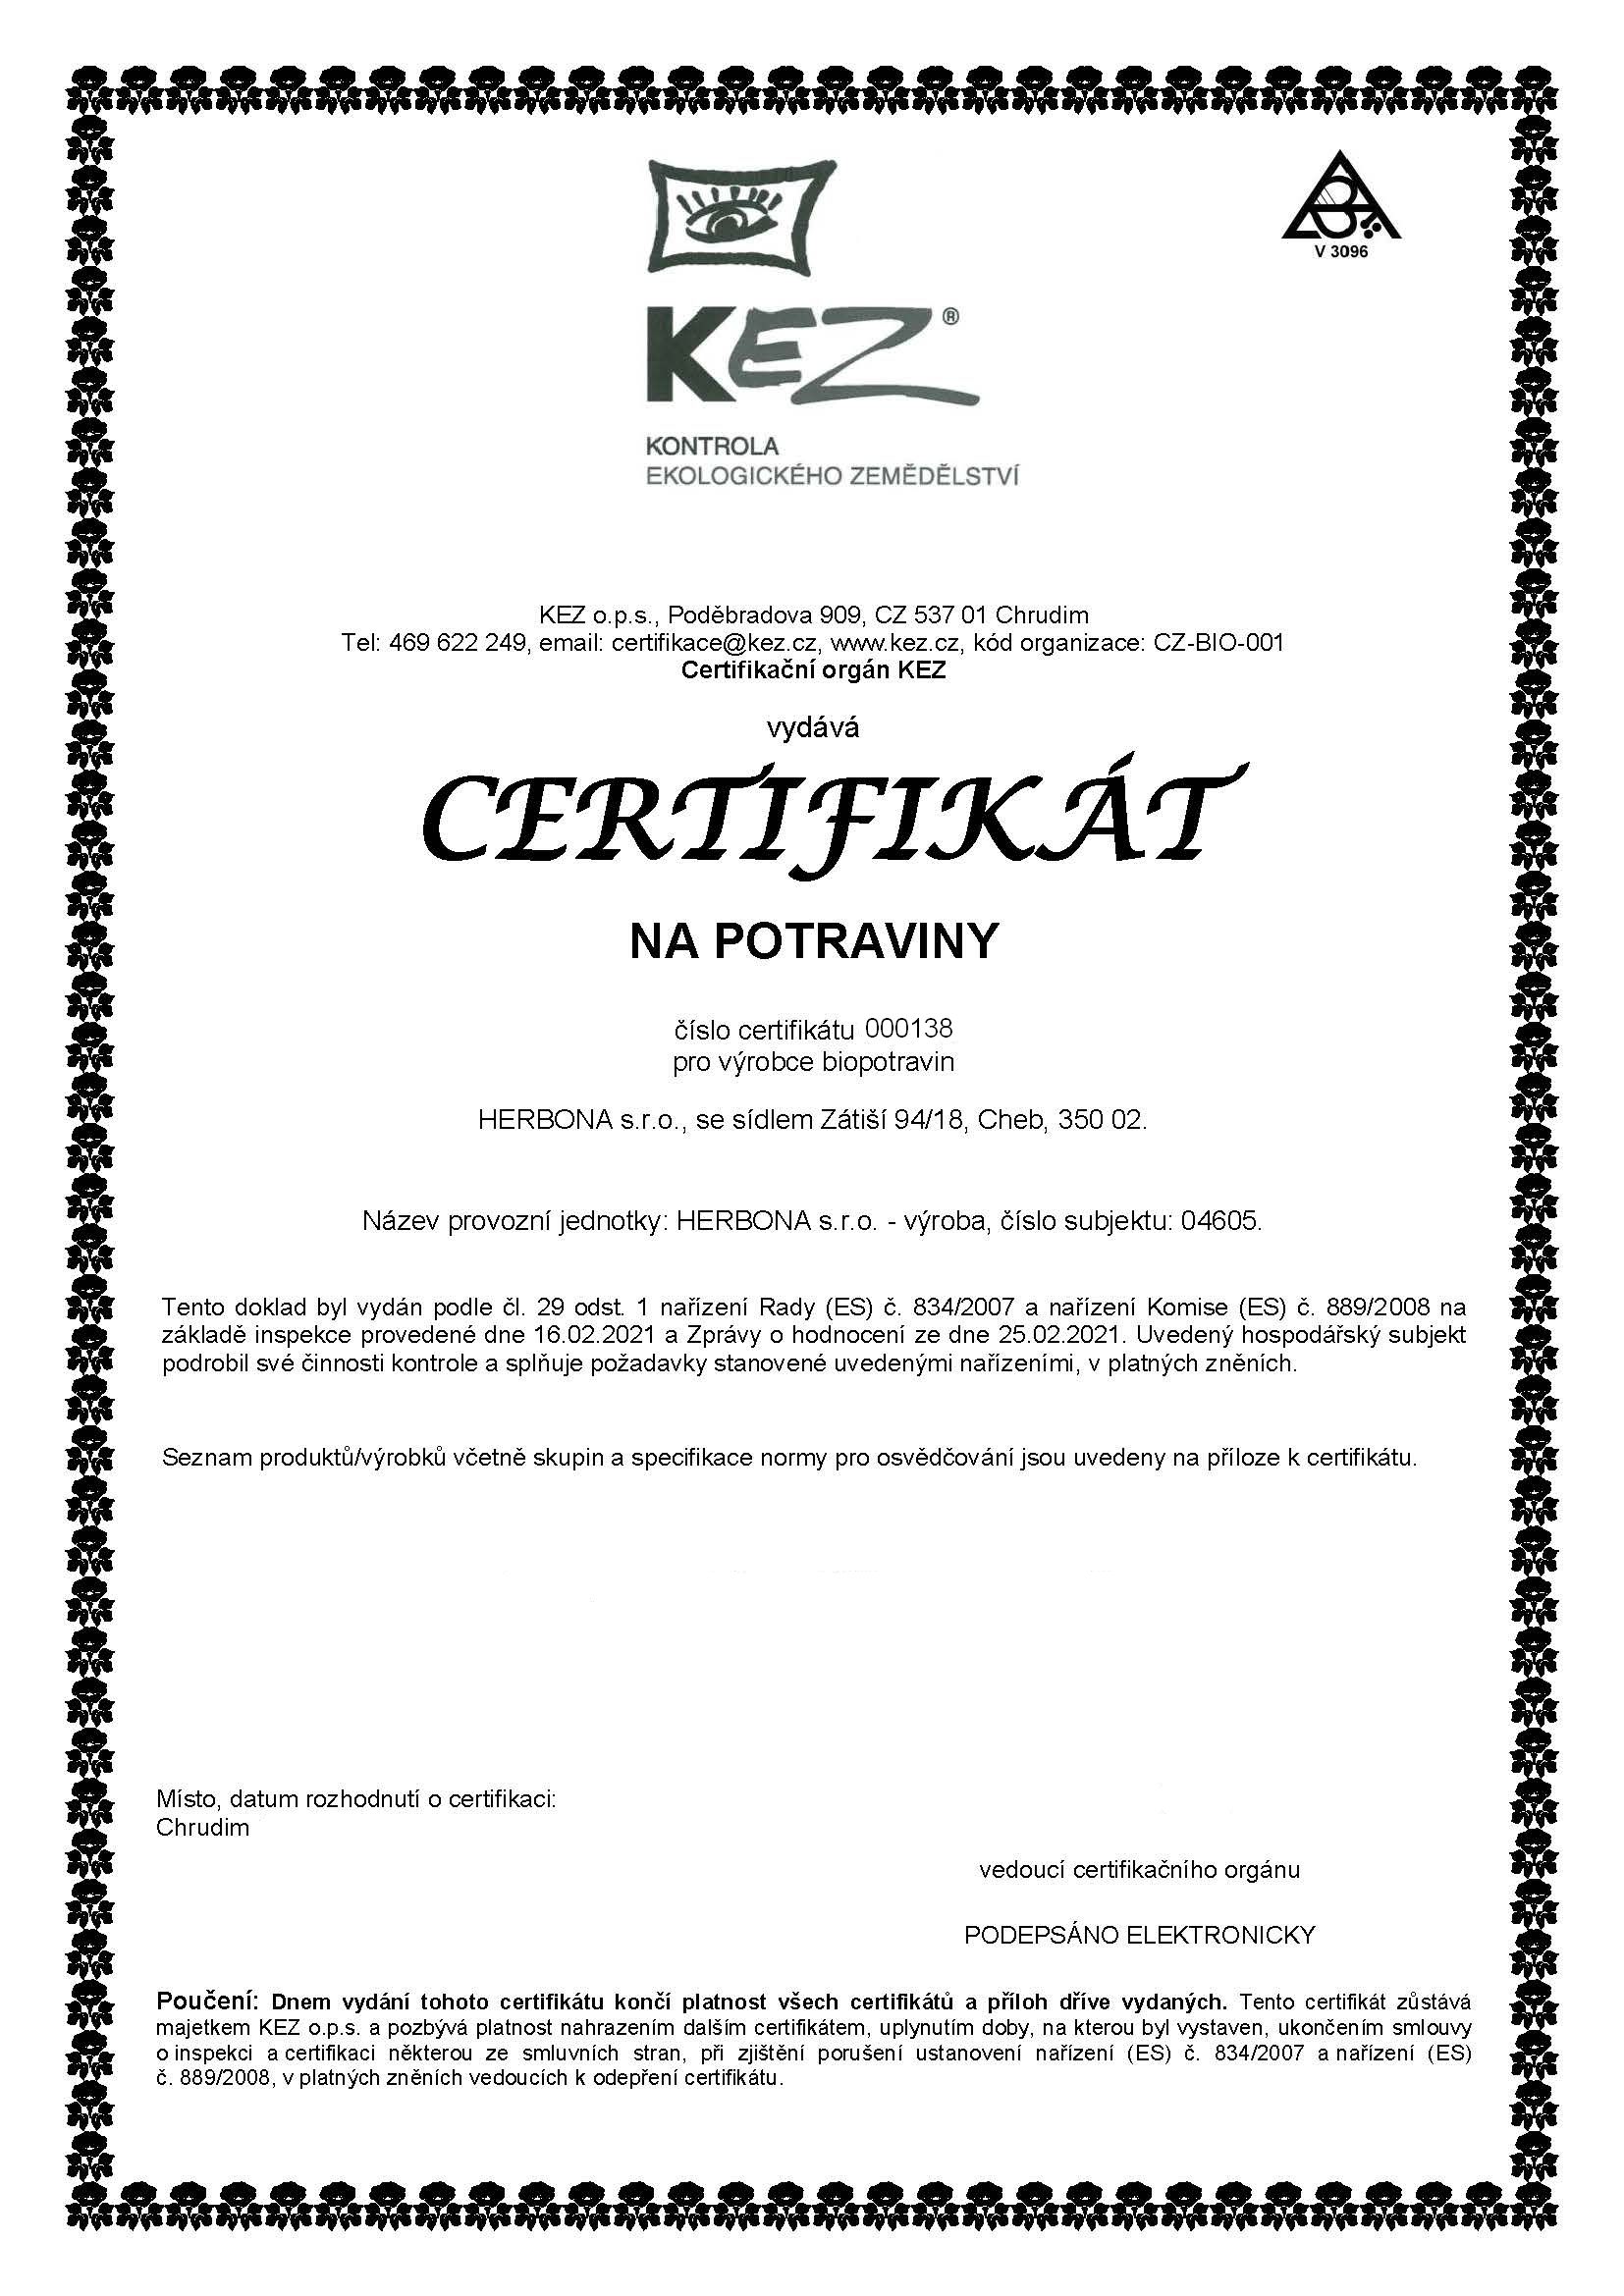 herbona-certifikat-bio